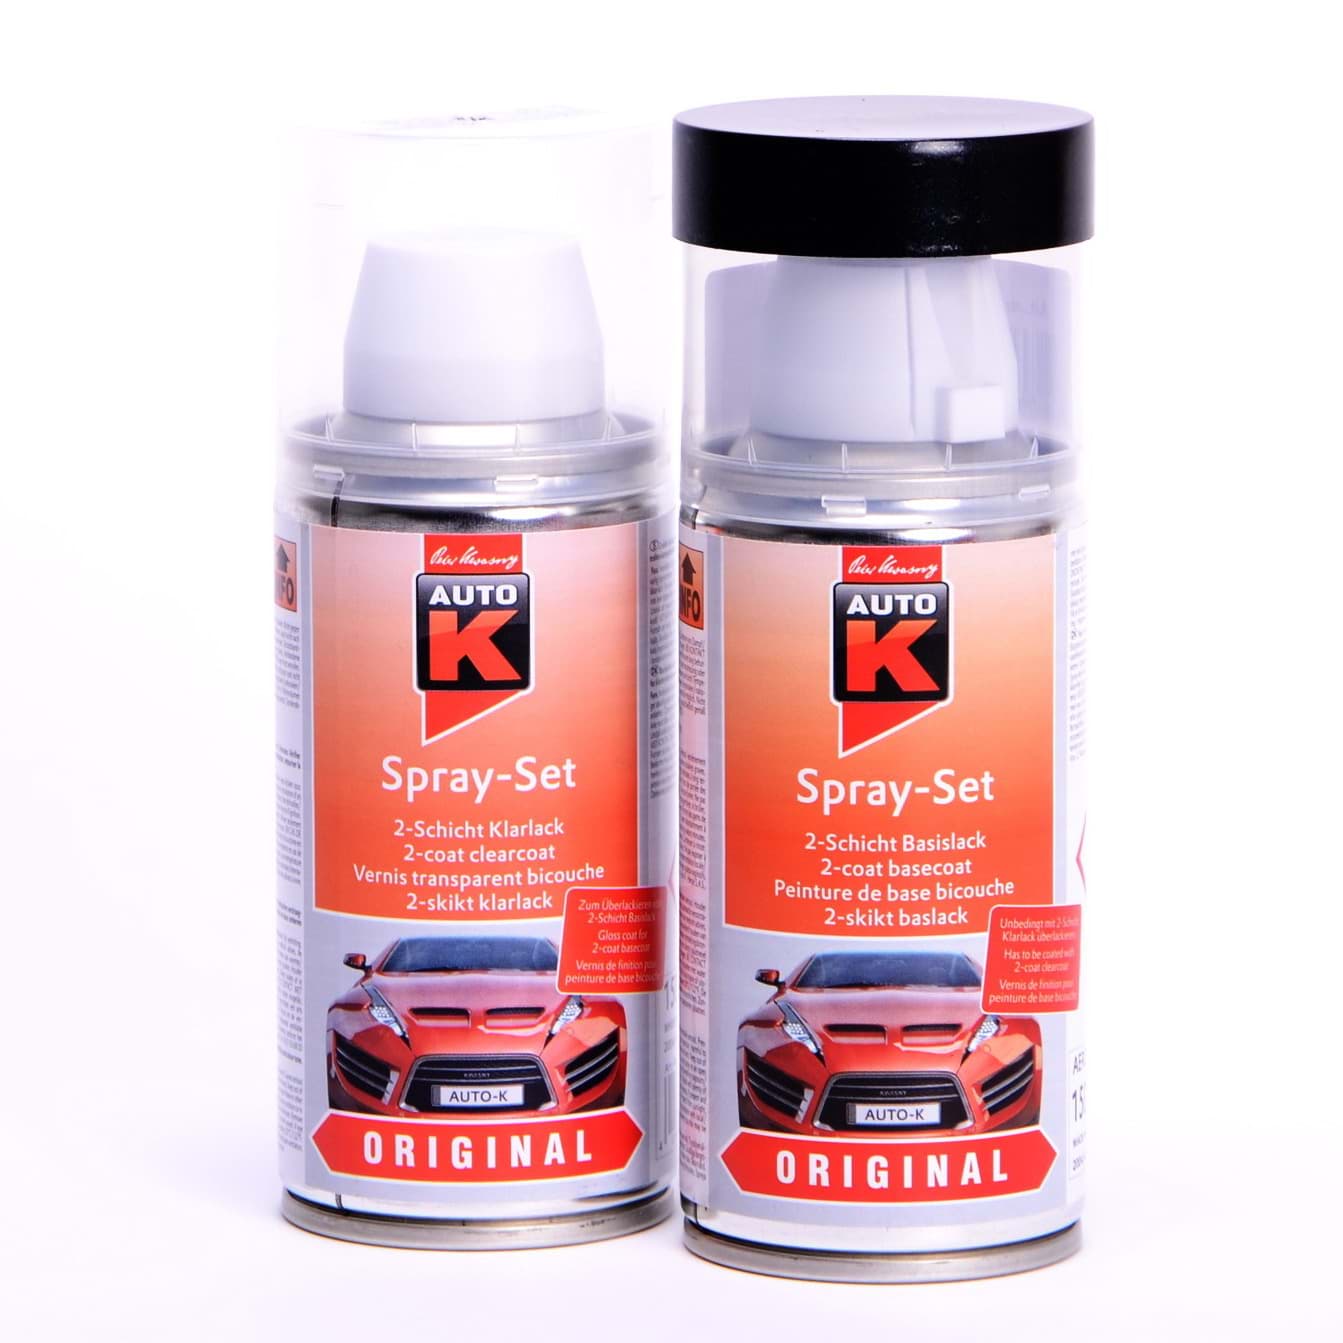 Auto-K Spray-Set Autolack für Mercedes 269 Turmalingrün met 23323 resmi